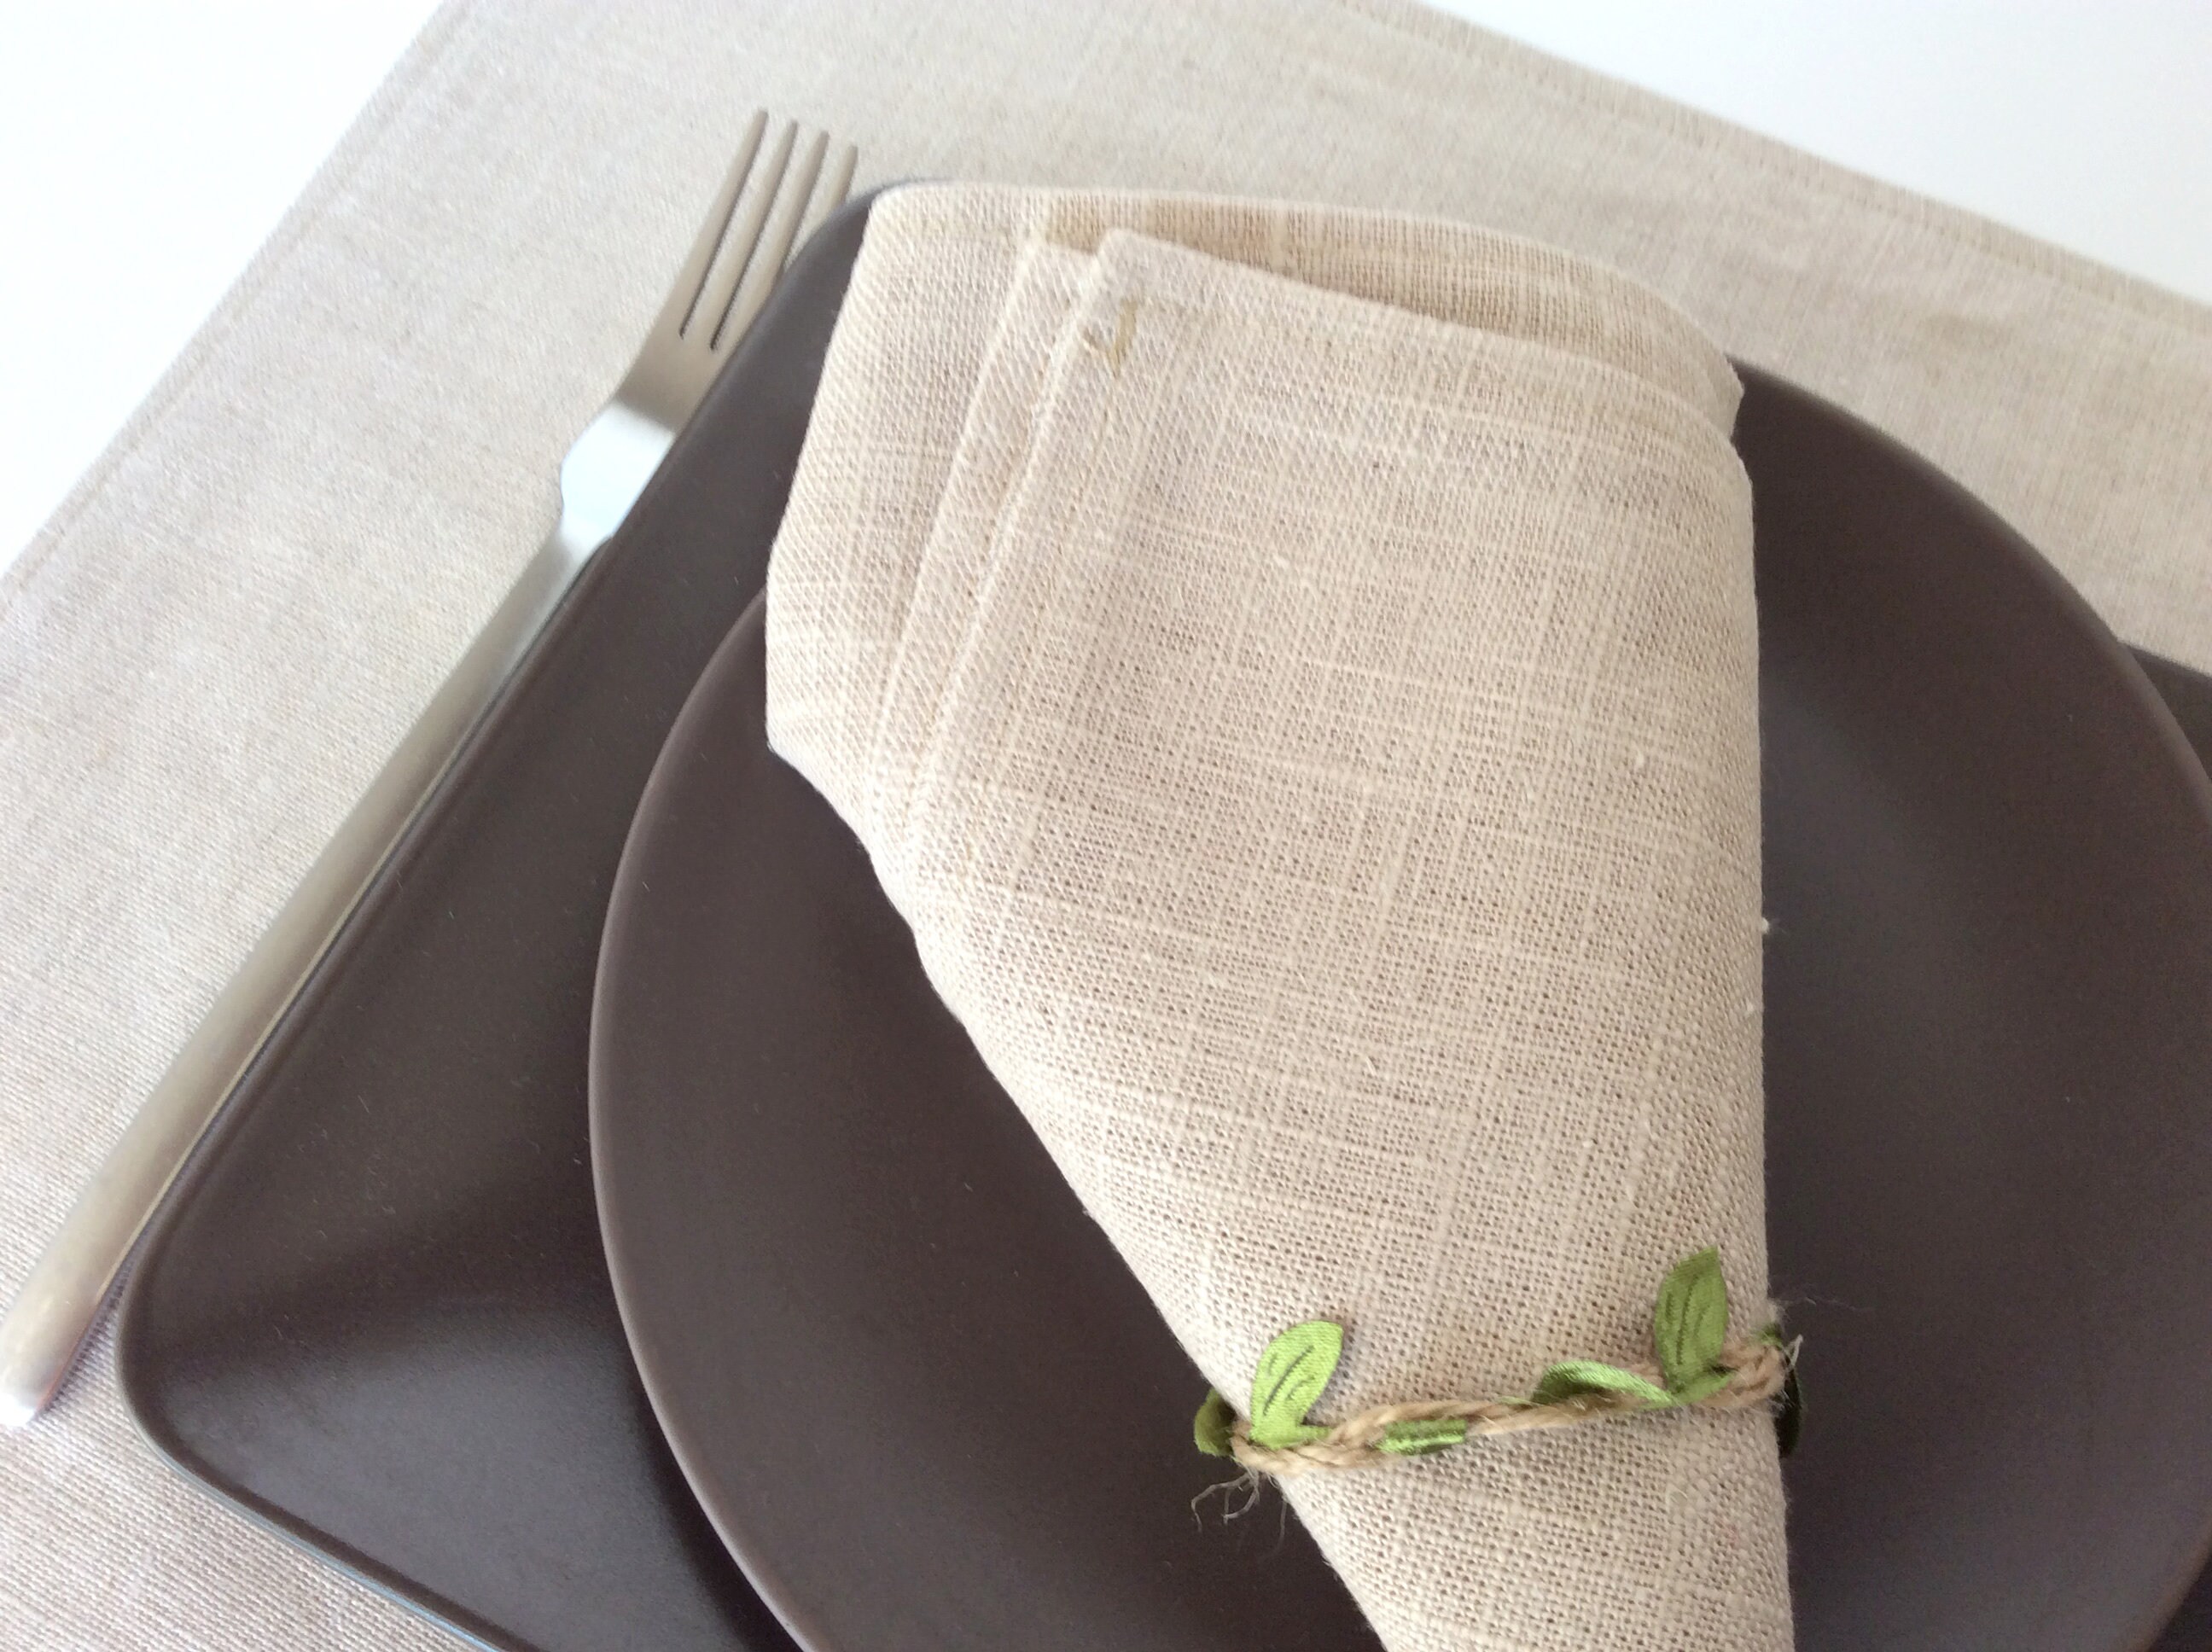 100% Linen Table Napkin Set. Choose Natural, White or Mixed - Set of 4 –  Woven Grey